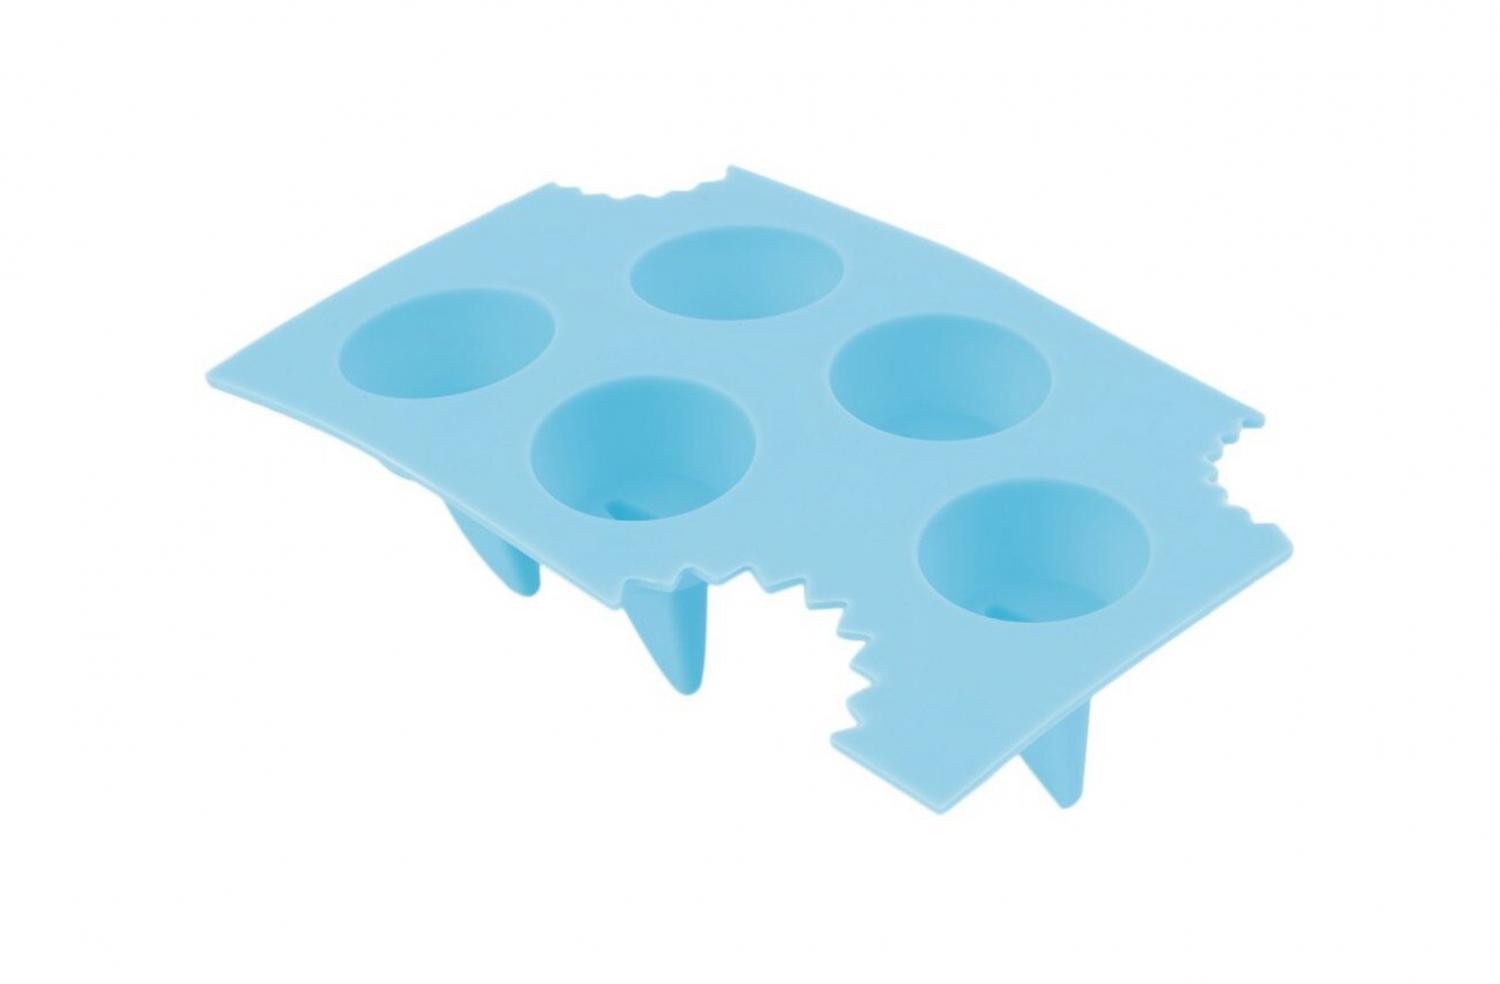 Shark Fin Ice Cube Tray - Shark fin shaped ice cubes